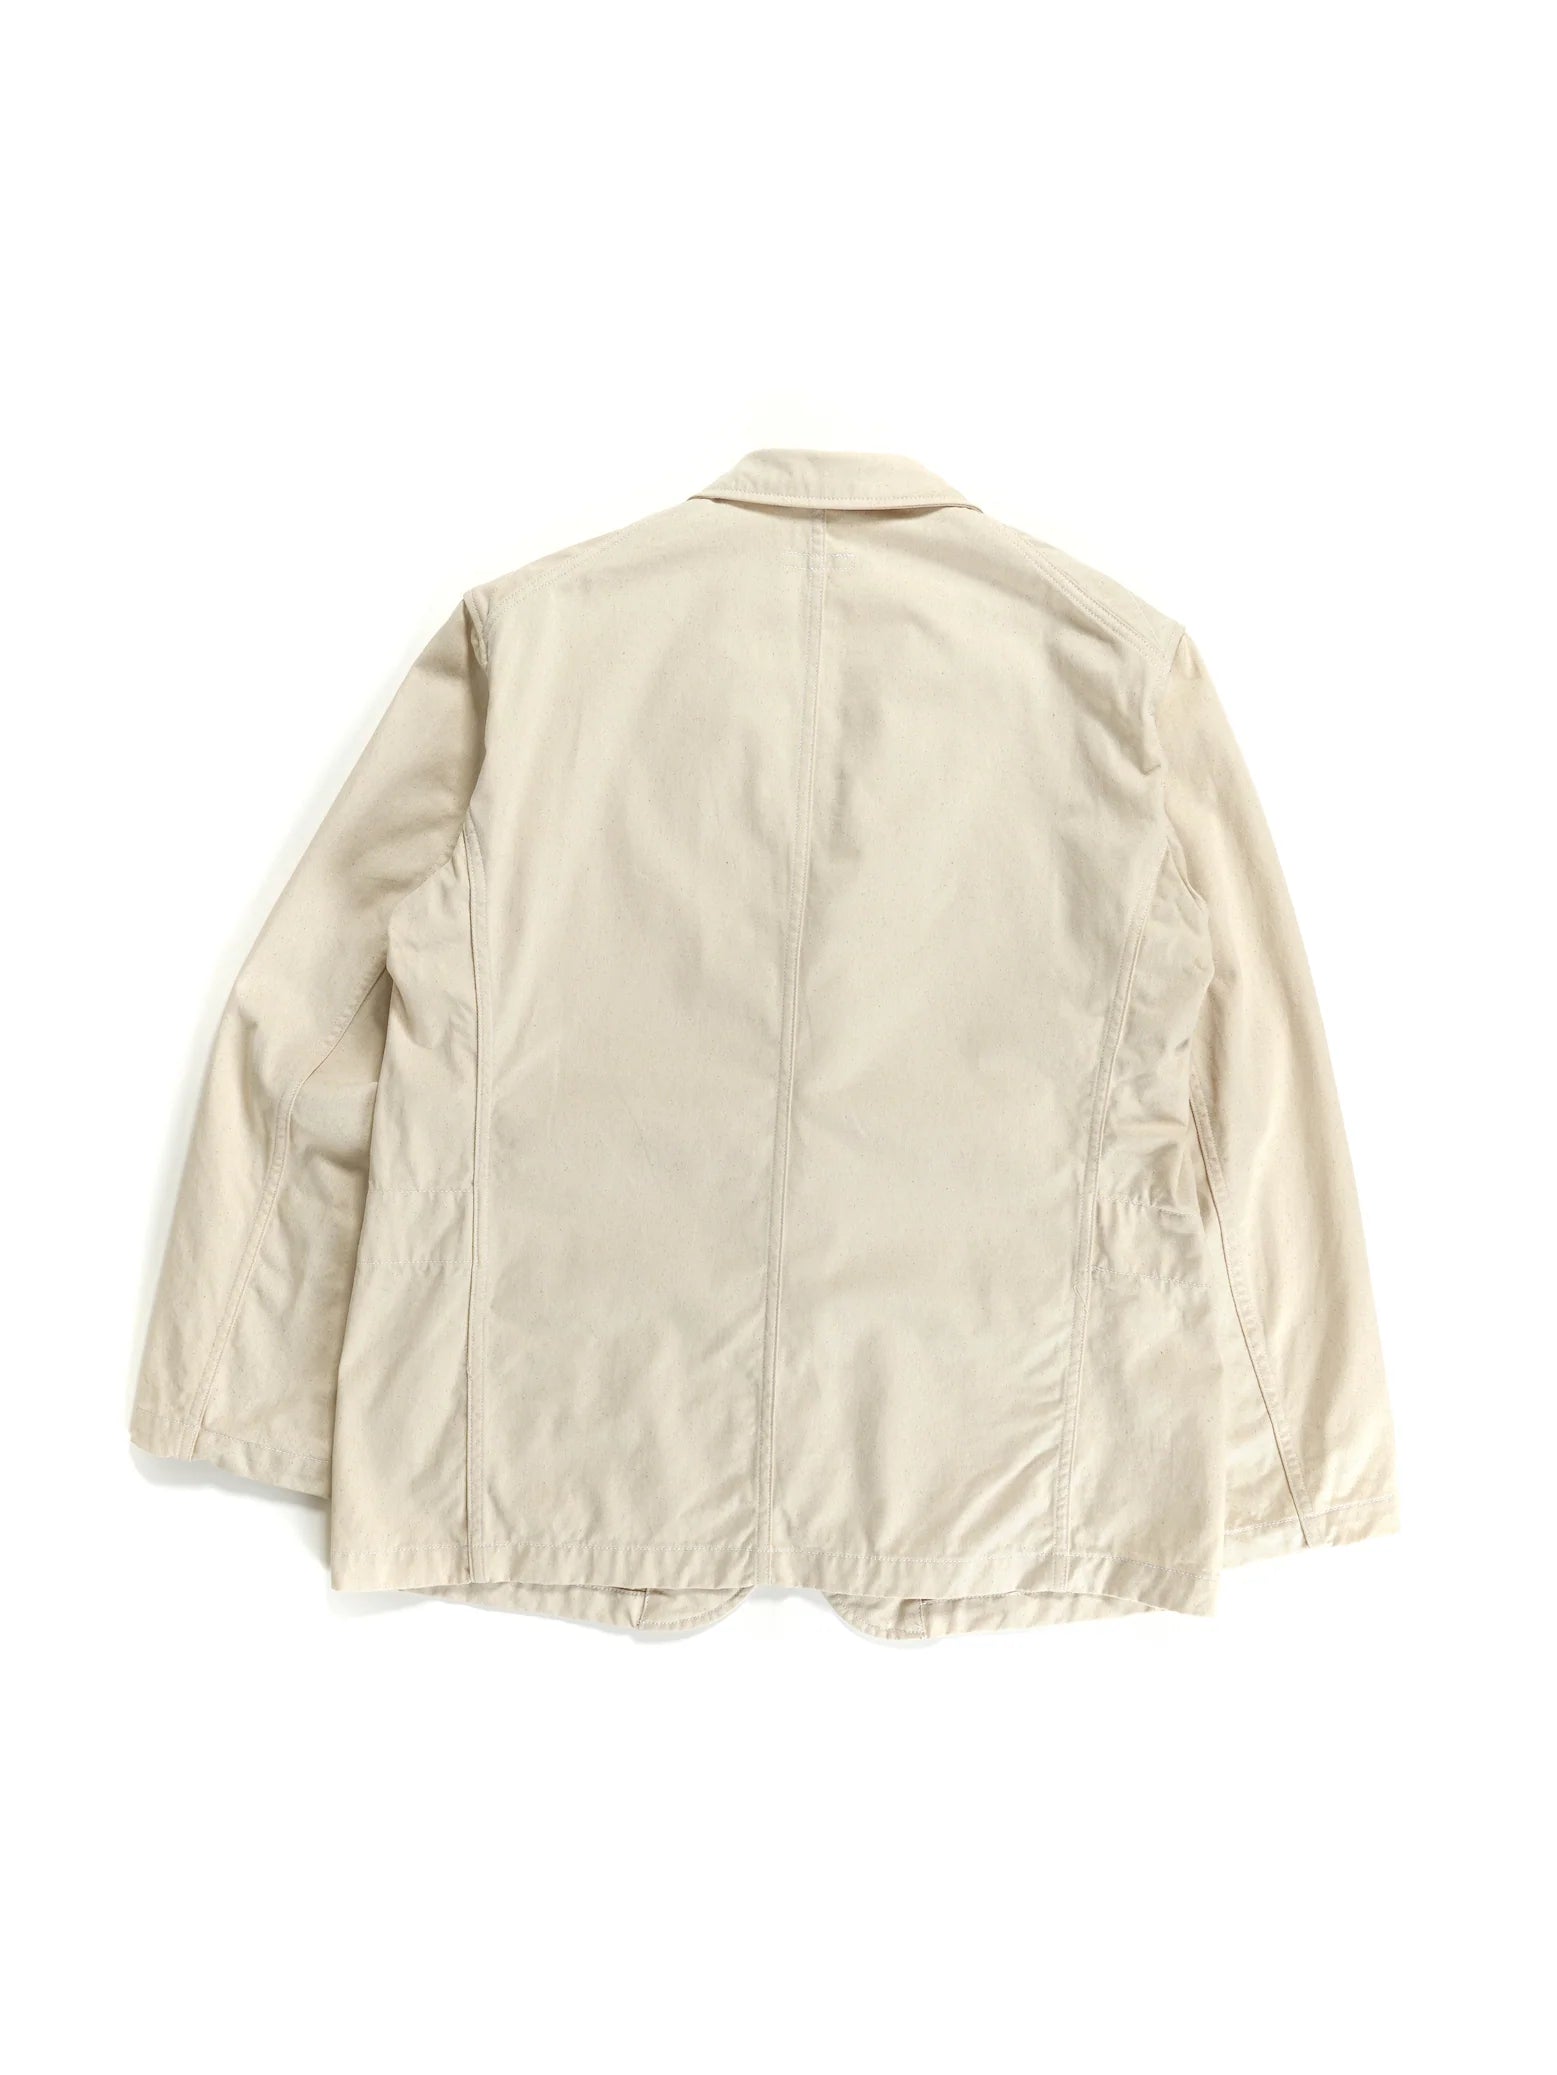 Engineered Garments Bedford Jacket - Natural Chino Twill